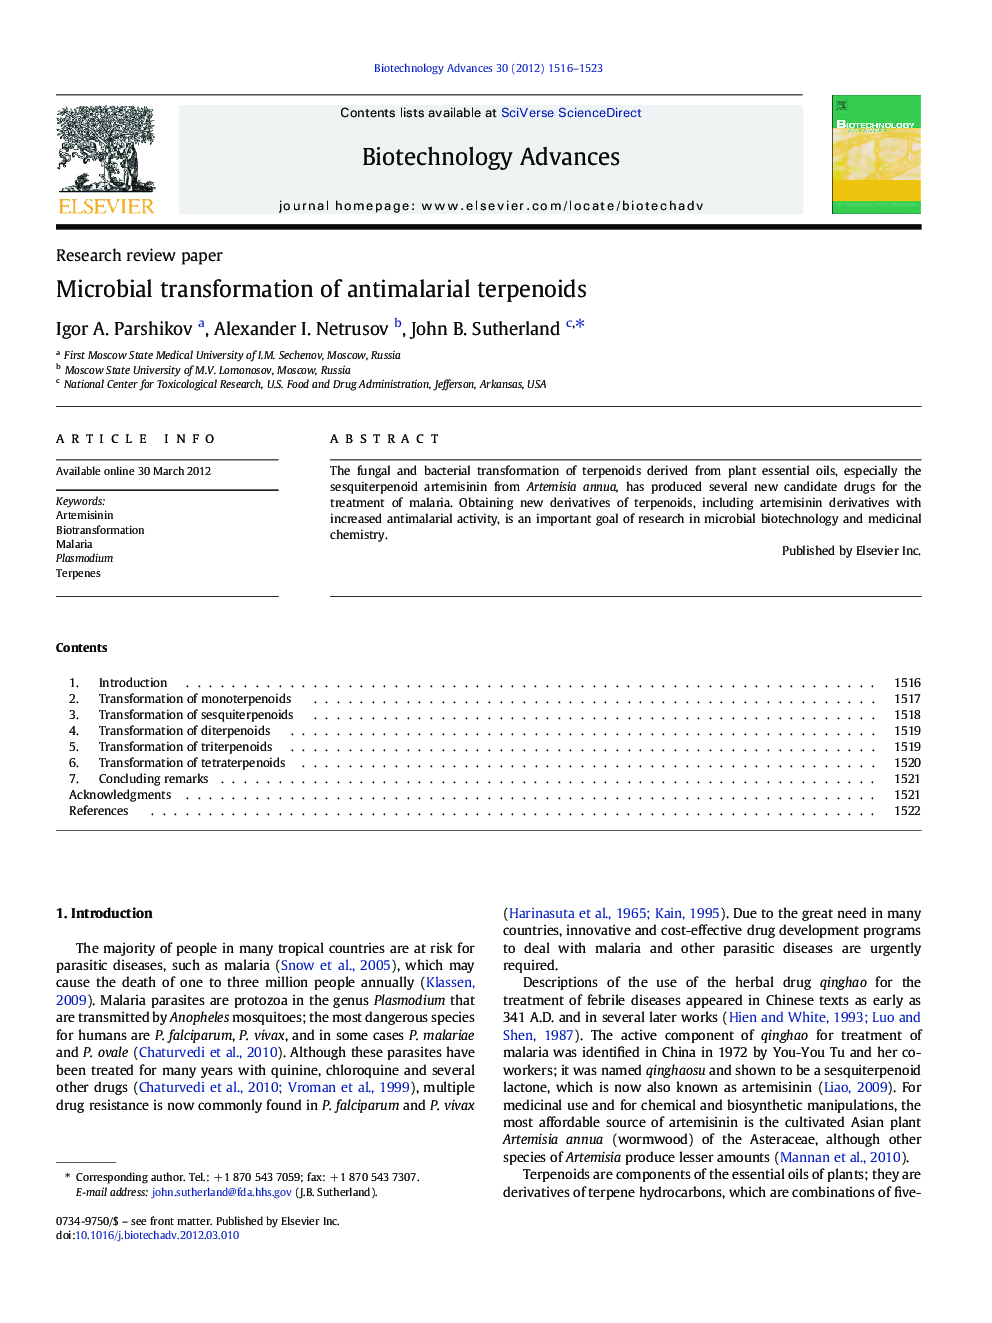 Microbial transformation of antimalarial terpenoids